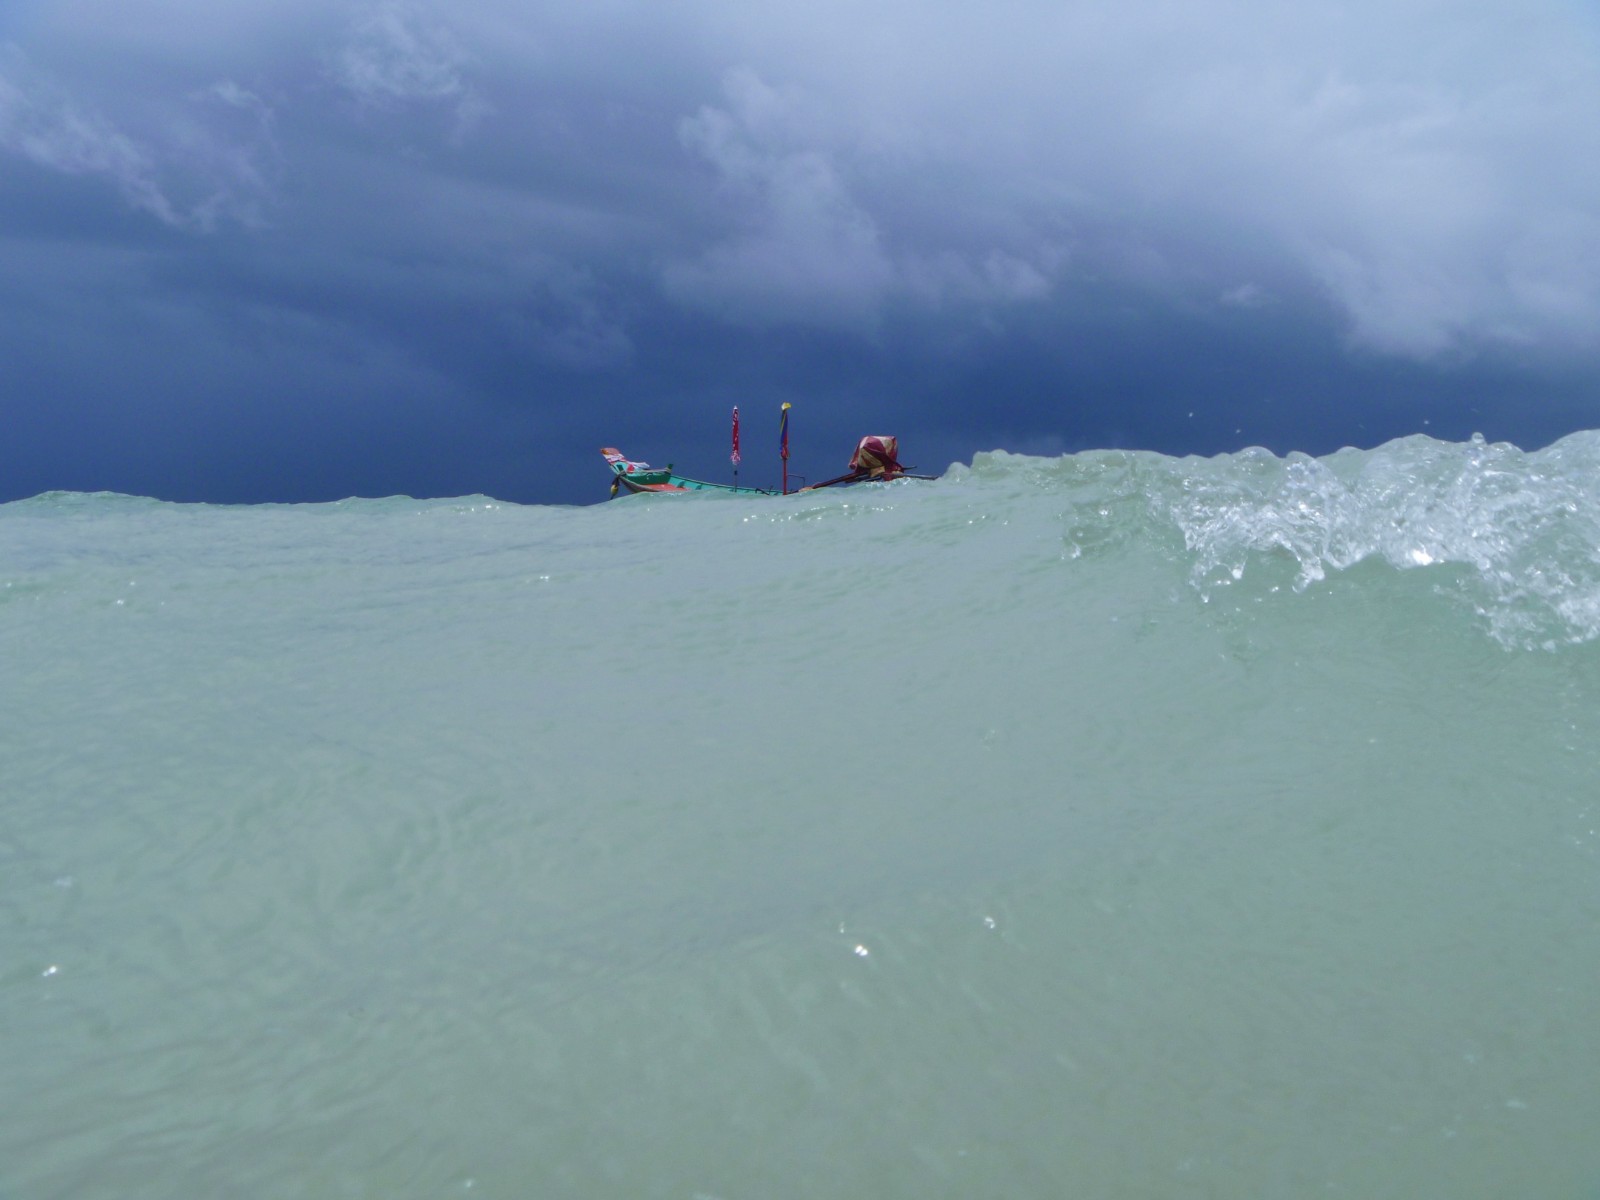 Stormy fishing day, Sea | Season | Water | Storm | Dark | Sky | Fishing | Boat | Mast | Ocean | Thailand | Fish